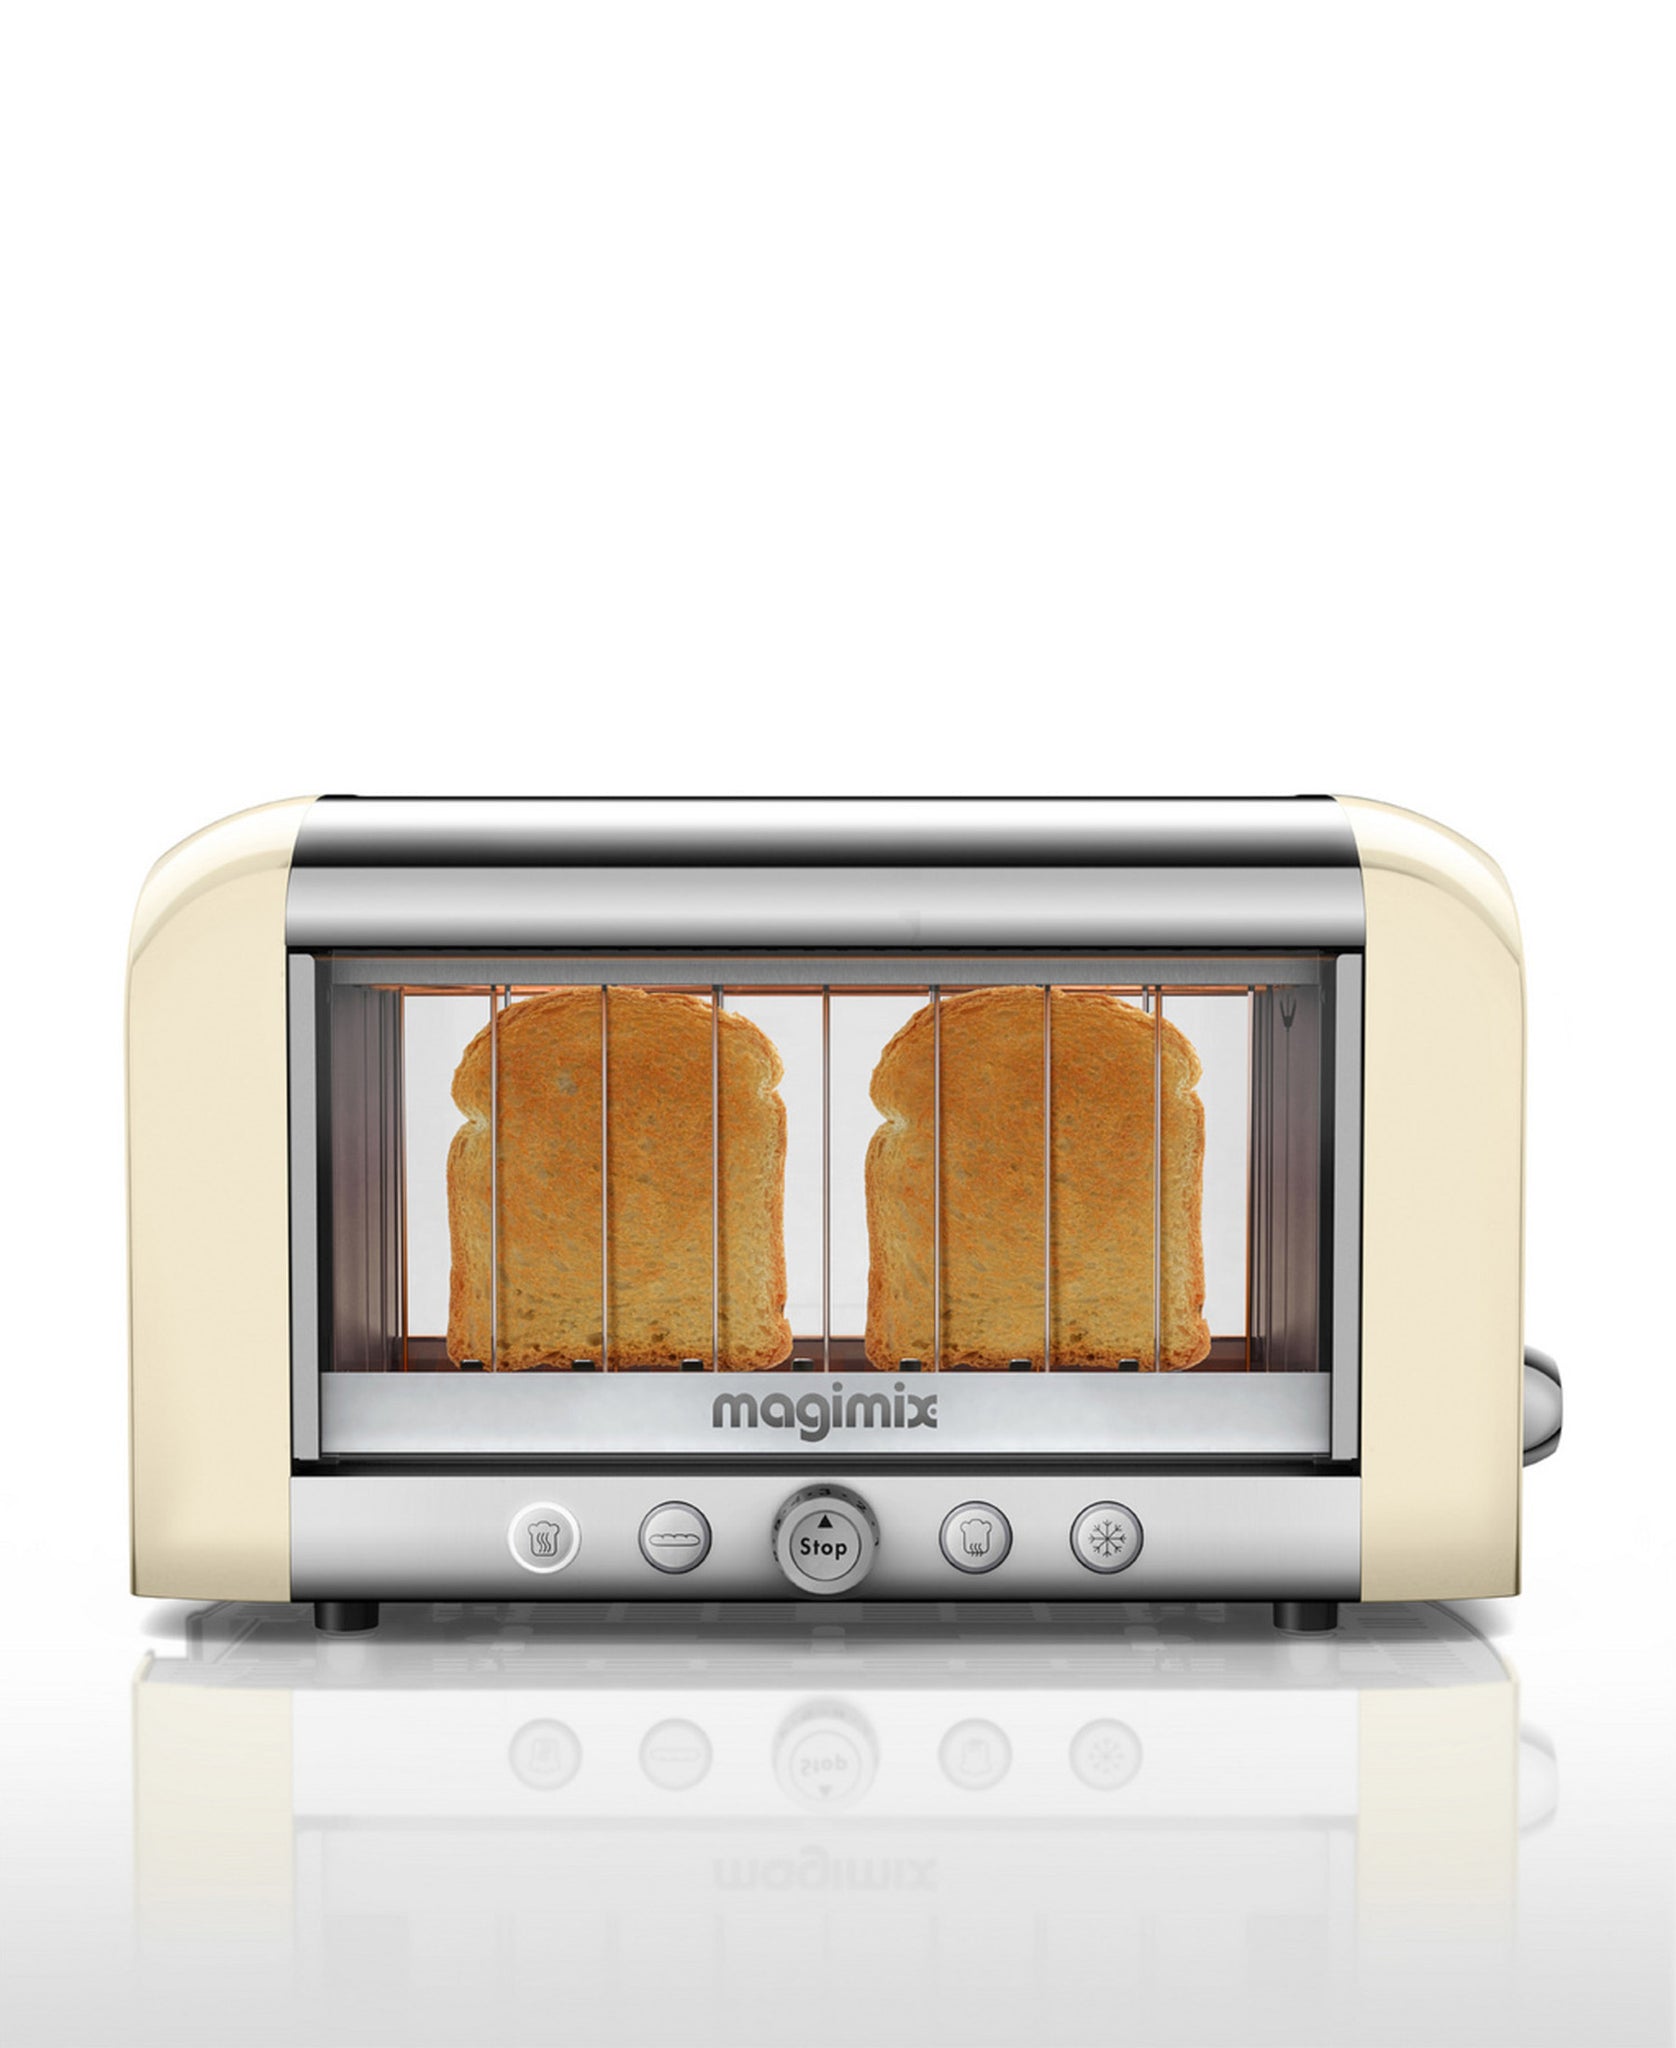 Magimix Vision 2 Slice Glass Toaster - Cream